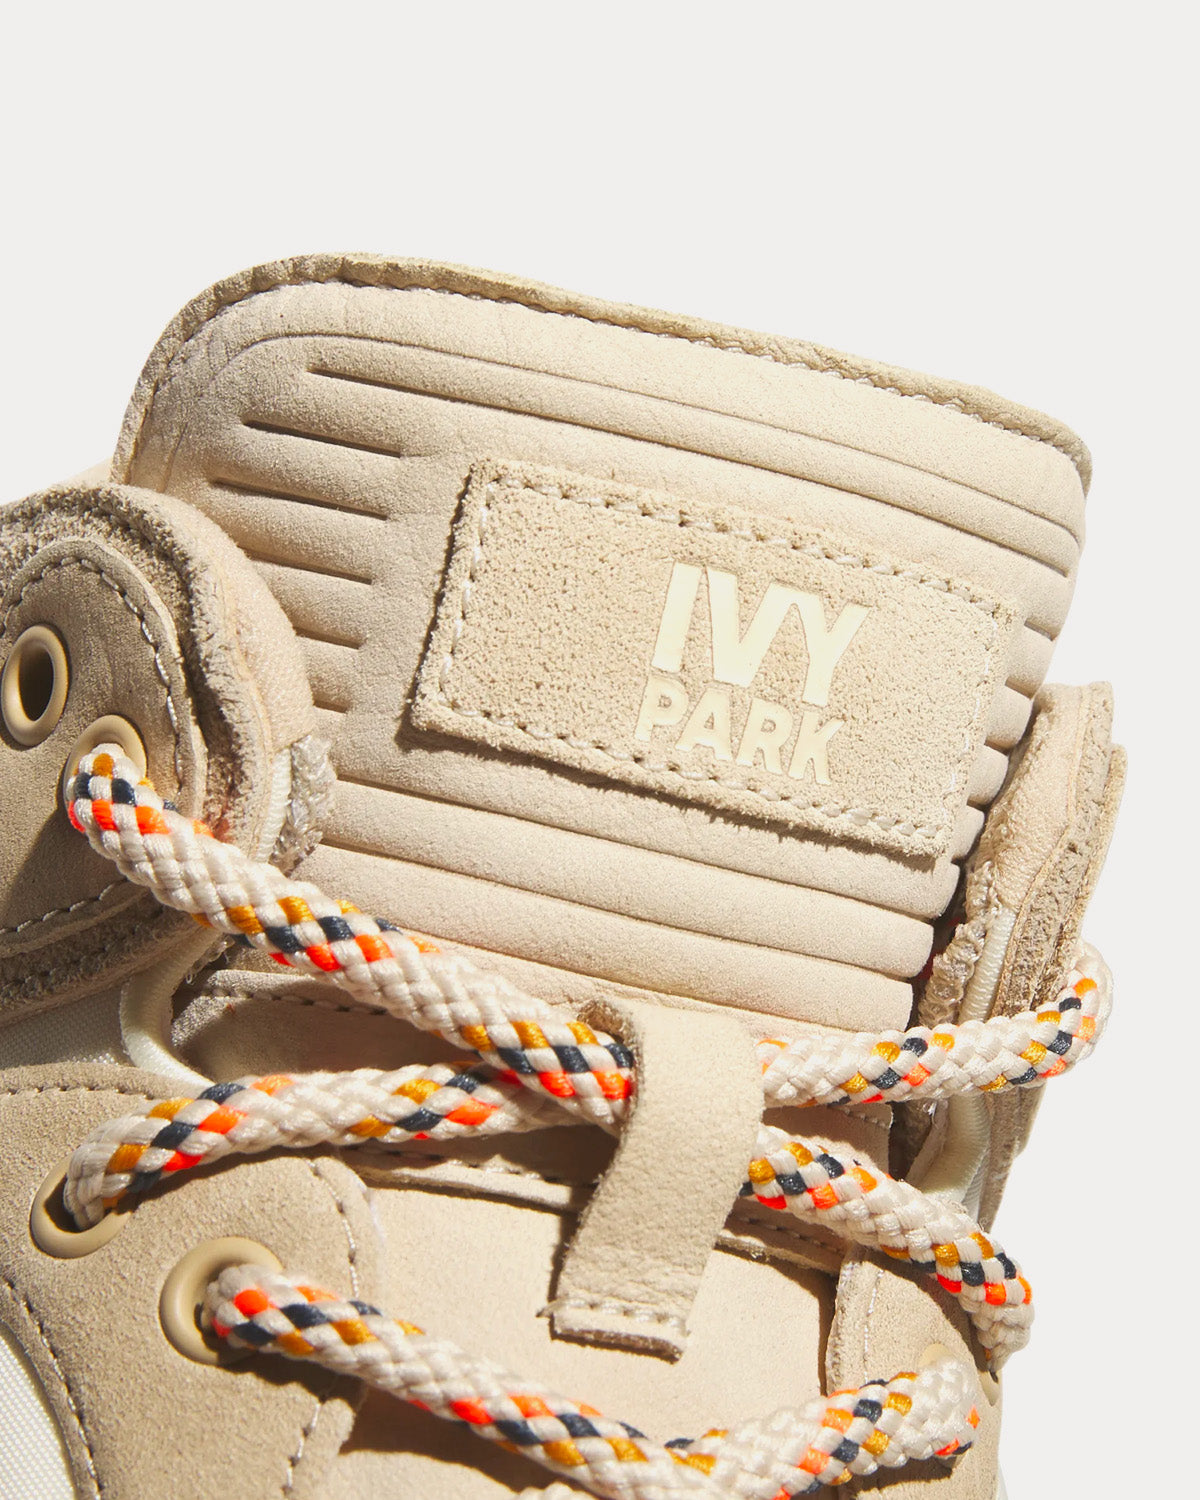 Adidas x Ivy Park - Top Ten 2000 Cream White / Pulse Mint / Magic Beige High Top Sneakers